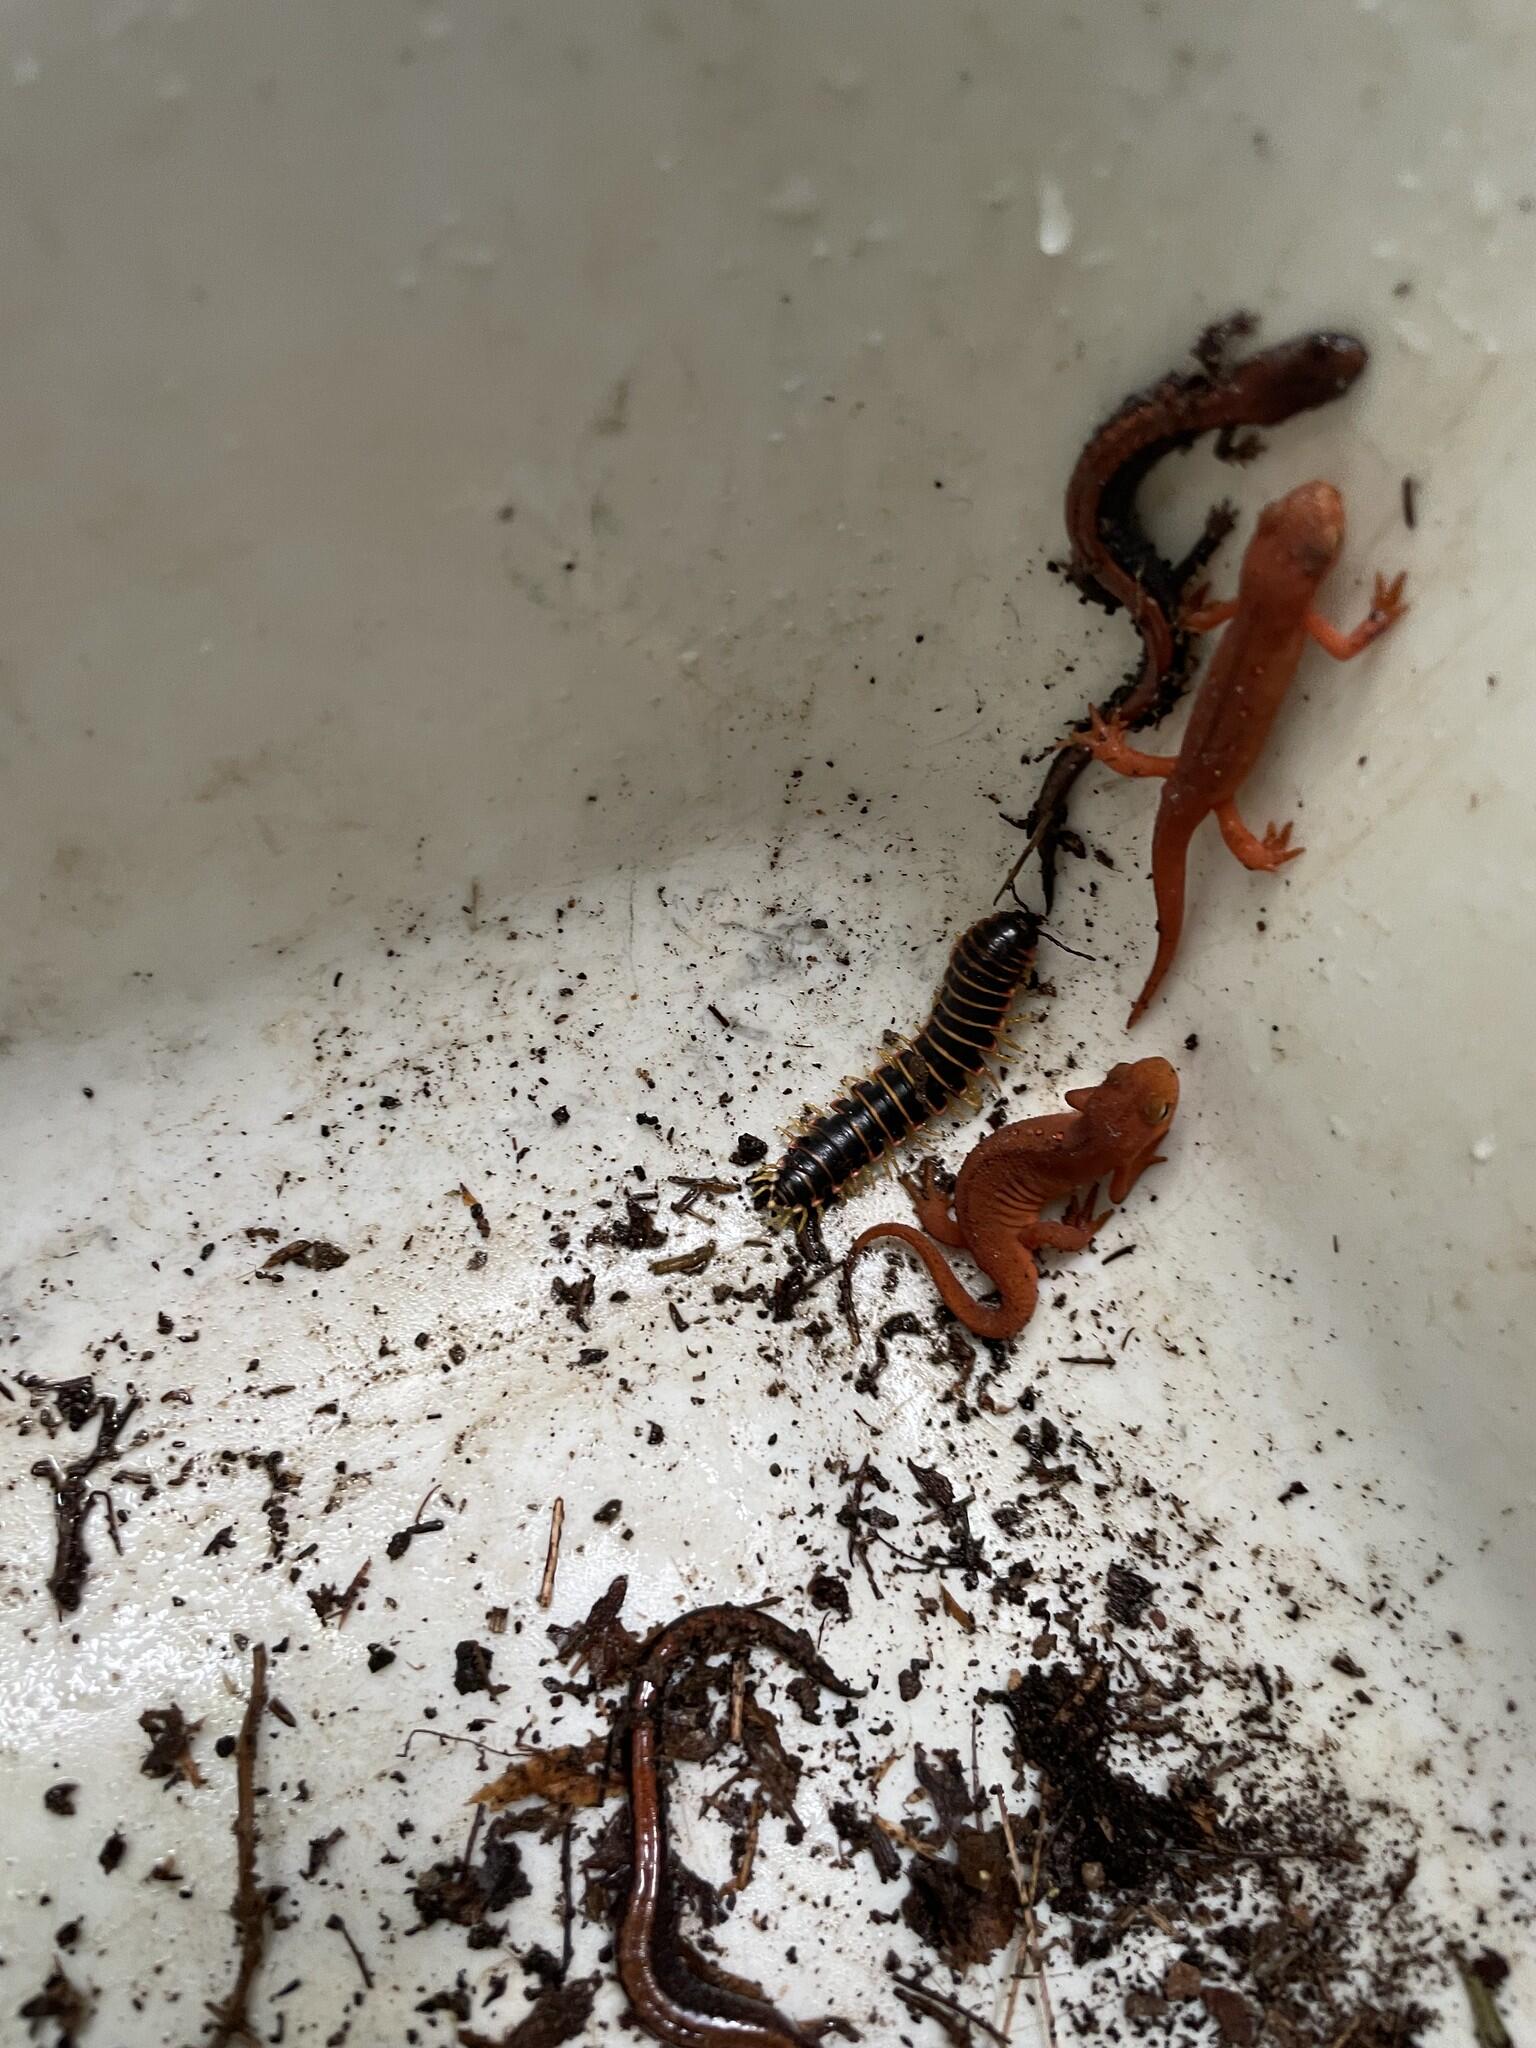 bin of salamanders and red efts